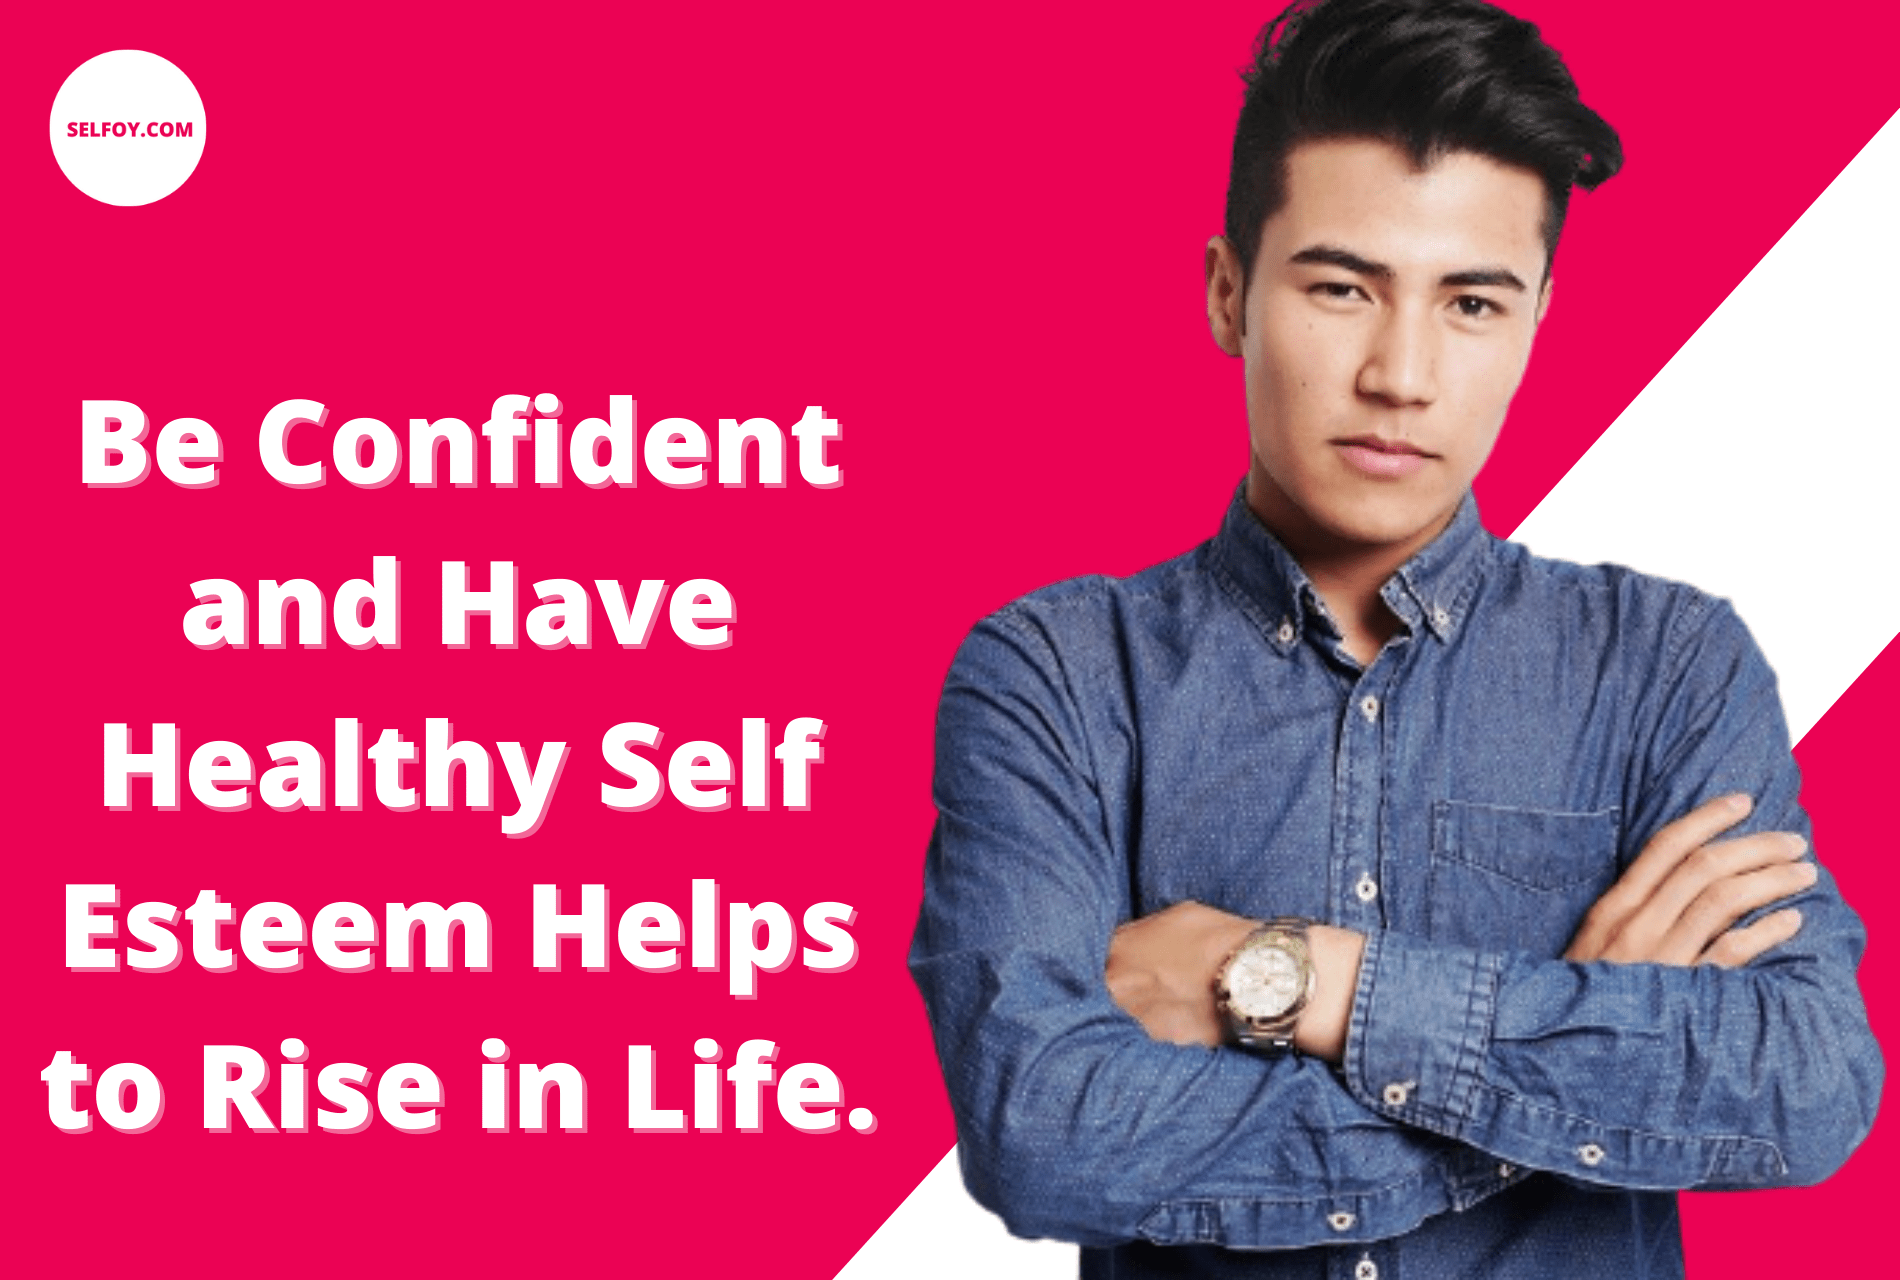 Man showing Self esteem versus self confidence